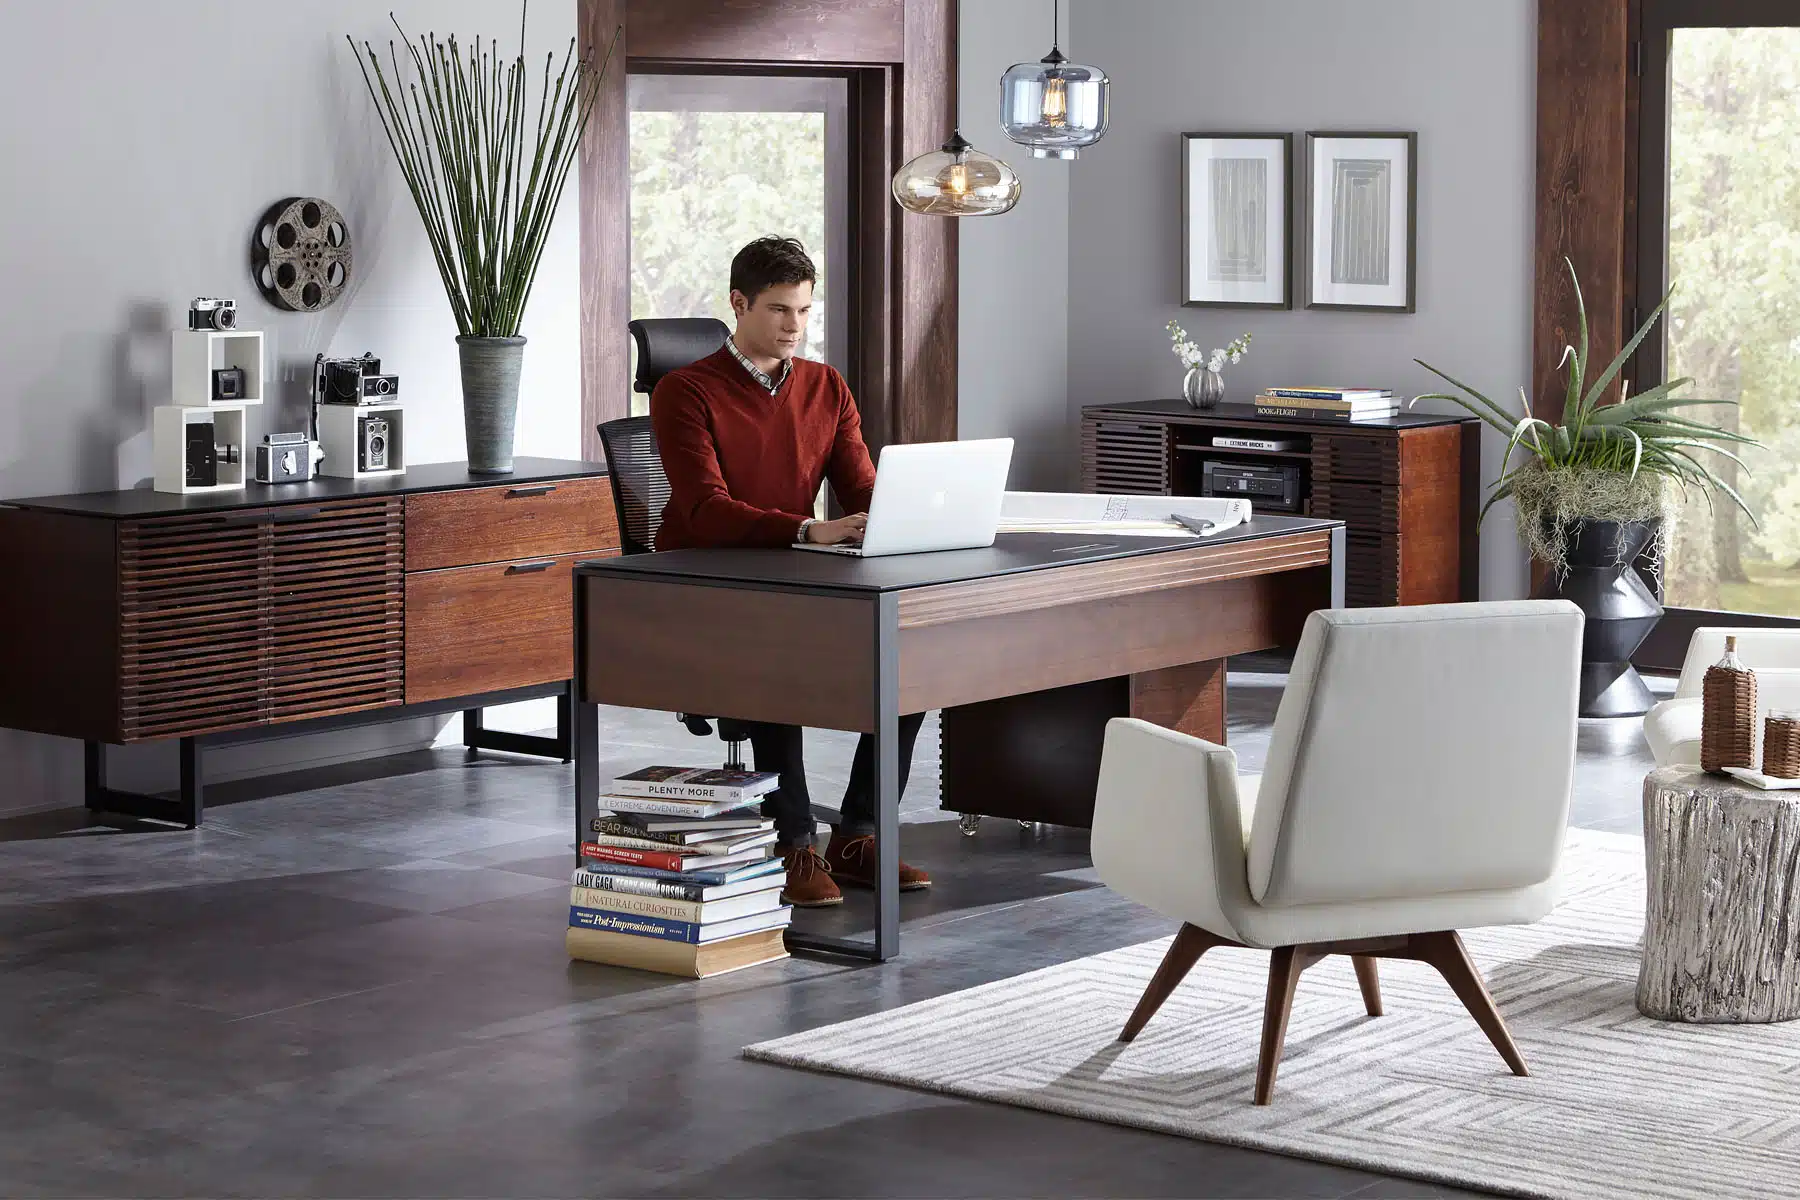 14 Modern Home Office Design Tips - San Francisco Design